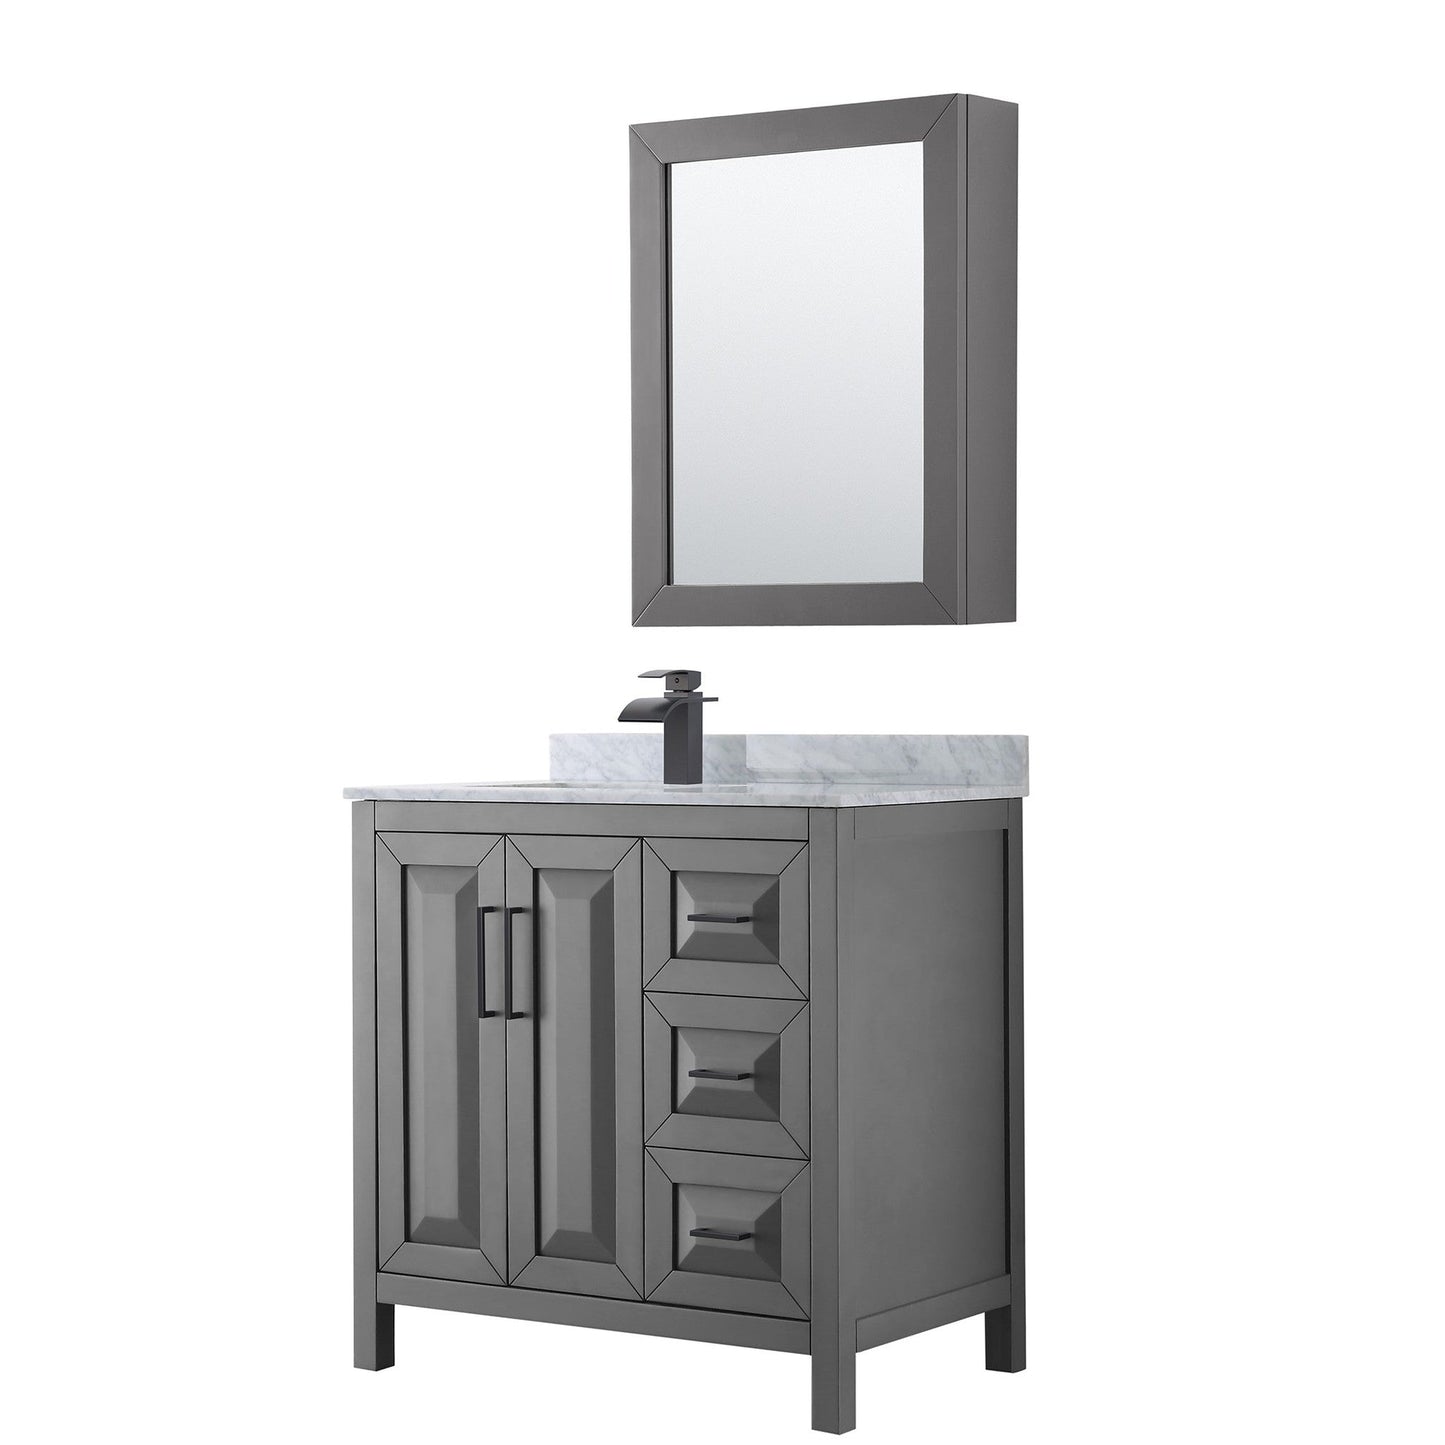 Daria 36" Single Bathroom Vanity in Dark Gray, White Carrara Marble Countertop, Undermount Square Sink, Matte Black Trim, Medicine Cabinet